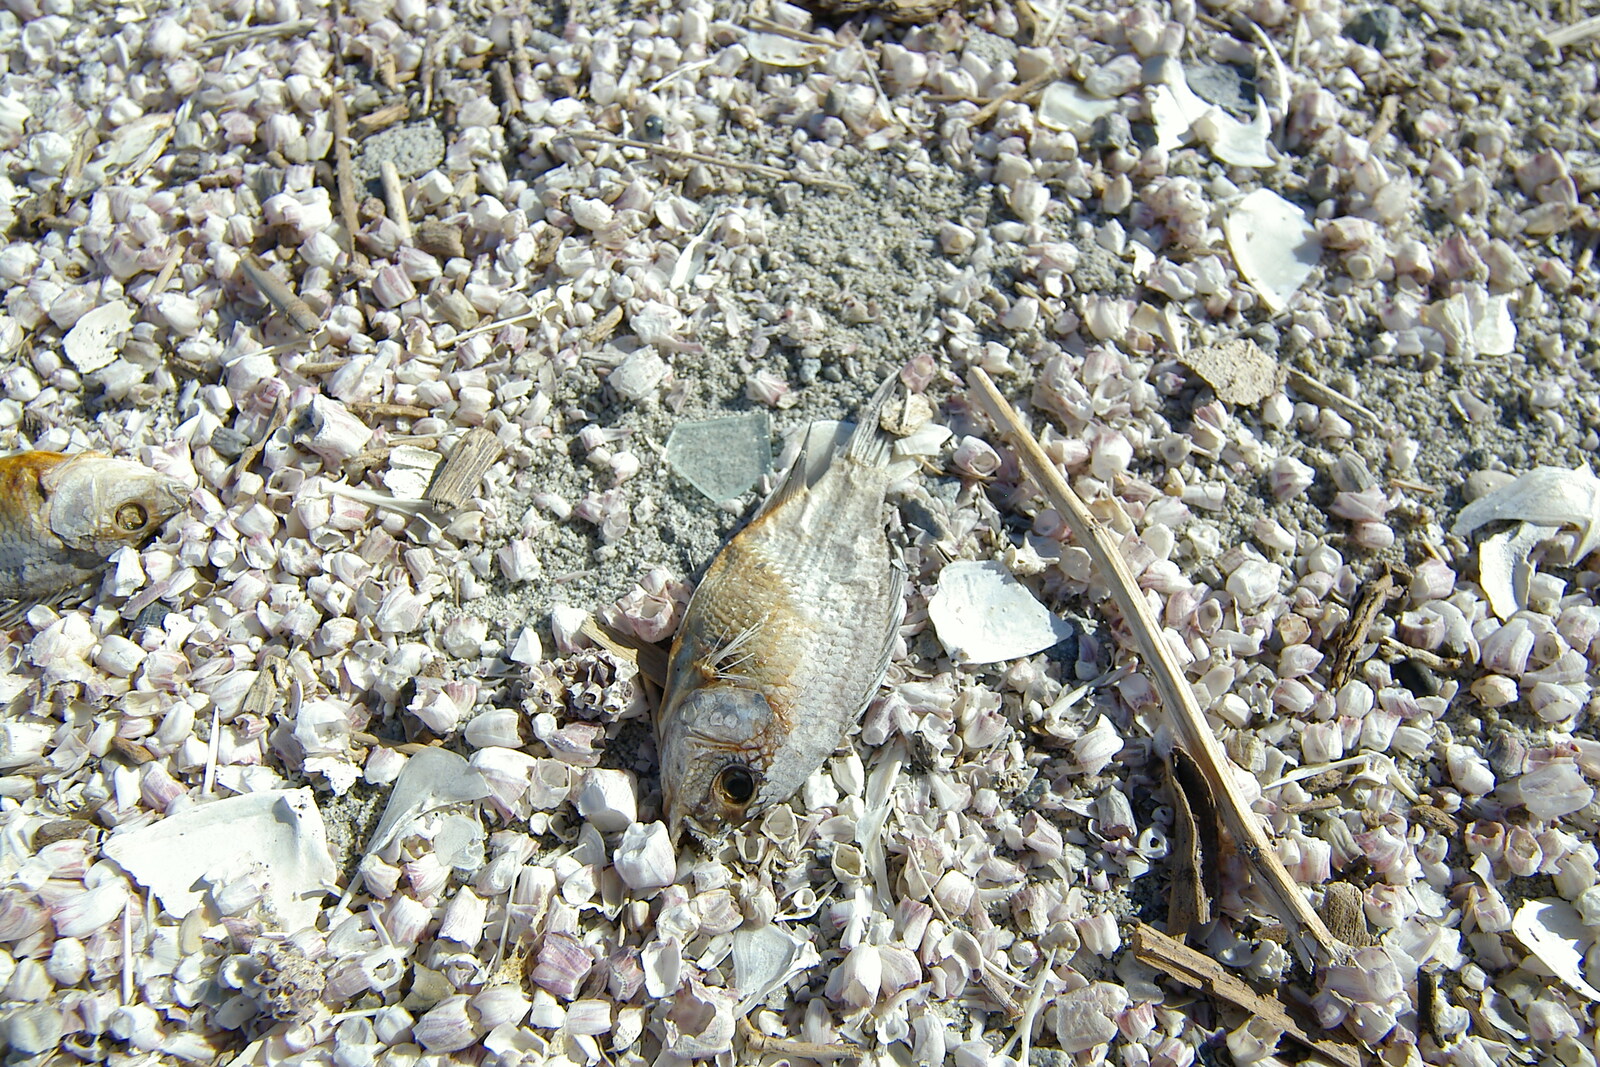 A dead Tilapia fish, which litter the shell beach from California Desert 2: The Salton Sea and Anza-Borrego to Julian, California, US - 24th September 2005